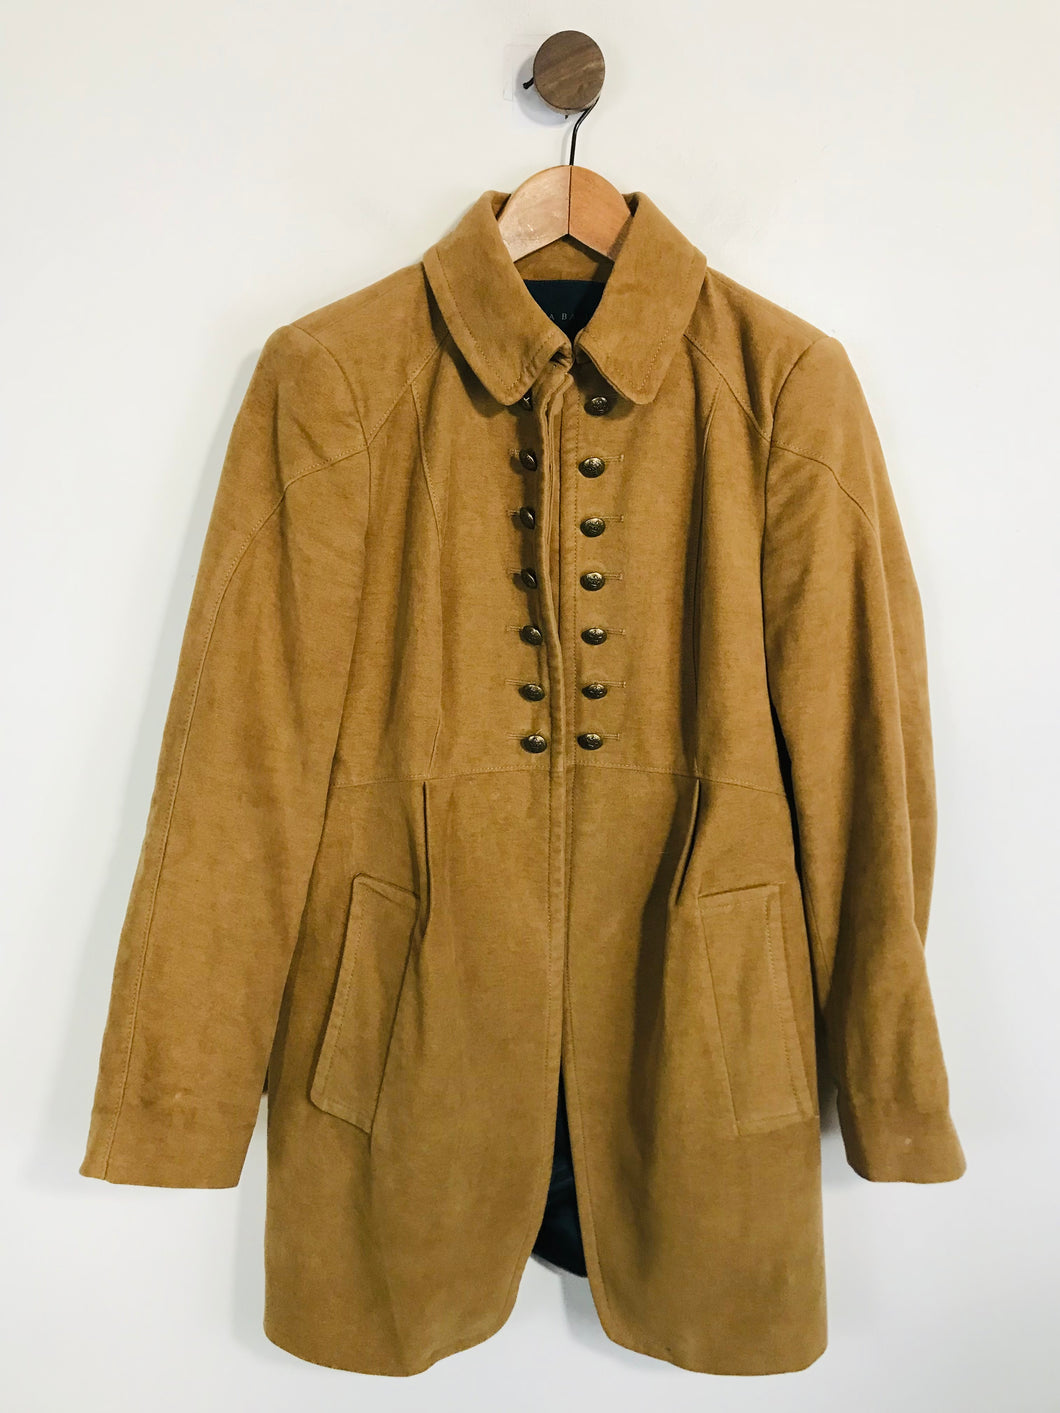 Zara Women's Cotton Military Jacket | L UK14 | Beige